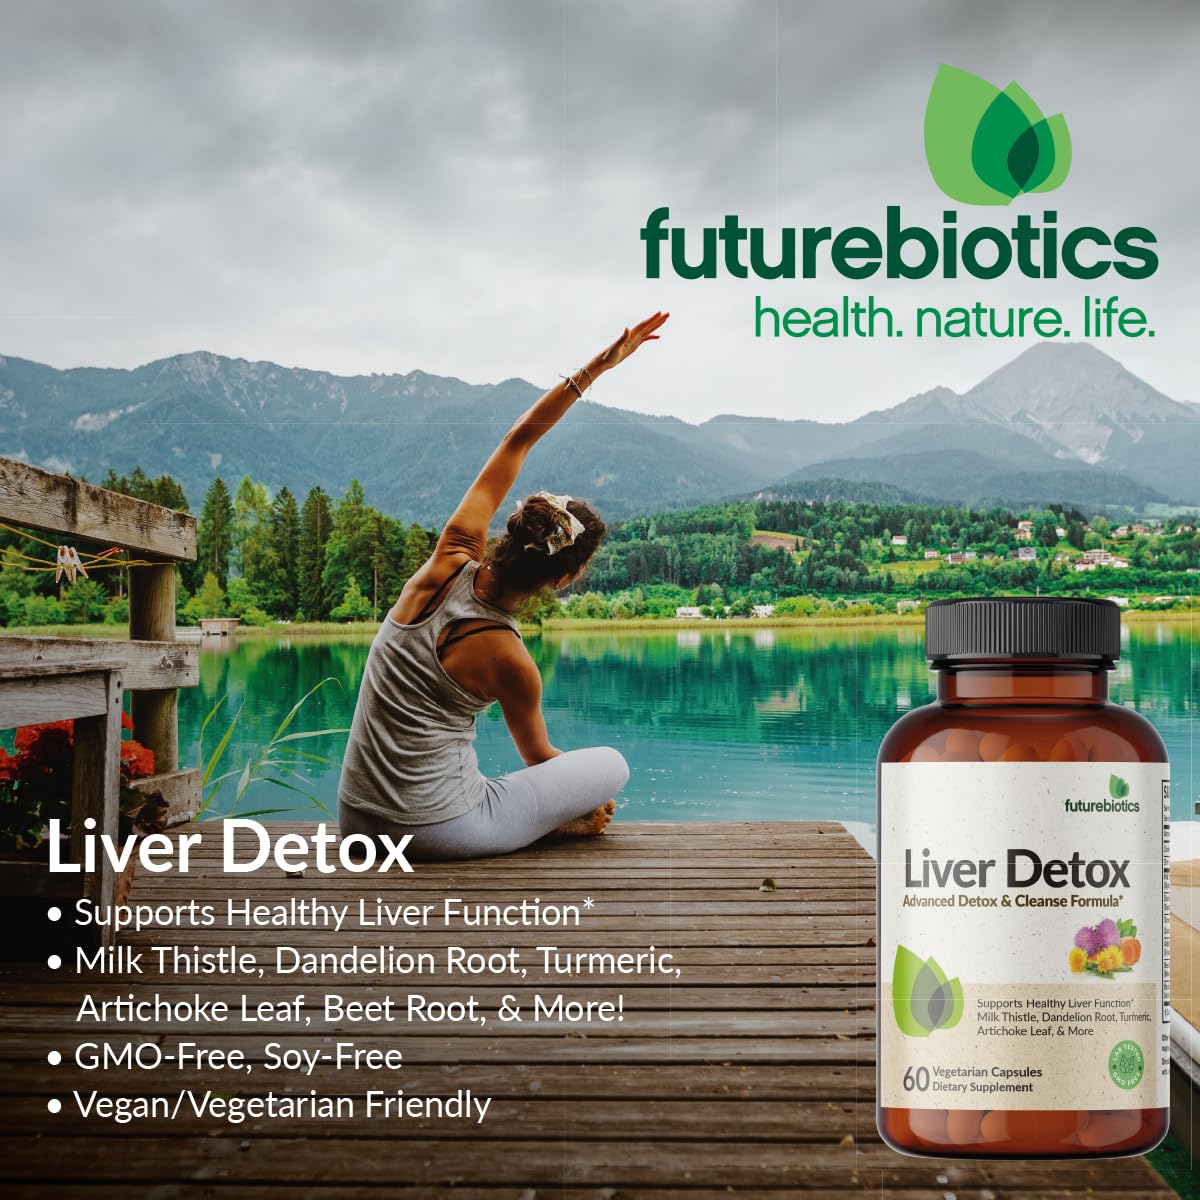 Futurebiotics Liver Detox Advanced Detox & Cleanse Formula Supports Healthy Liver Function with Milk Thistle, Dandelion Root, Turmeric Artichoke Leaf, & More, Non-GMO, 60 Vegetarian Capsules